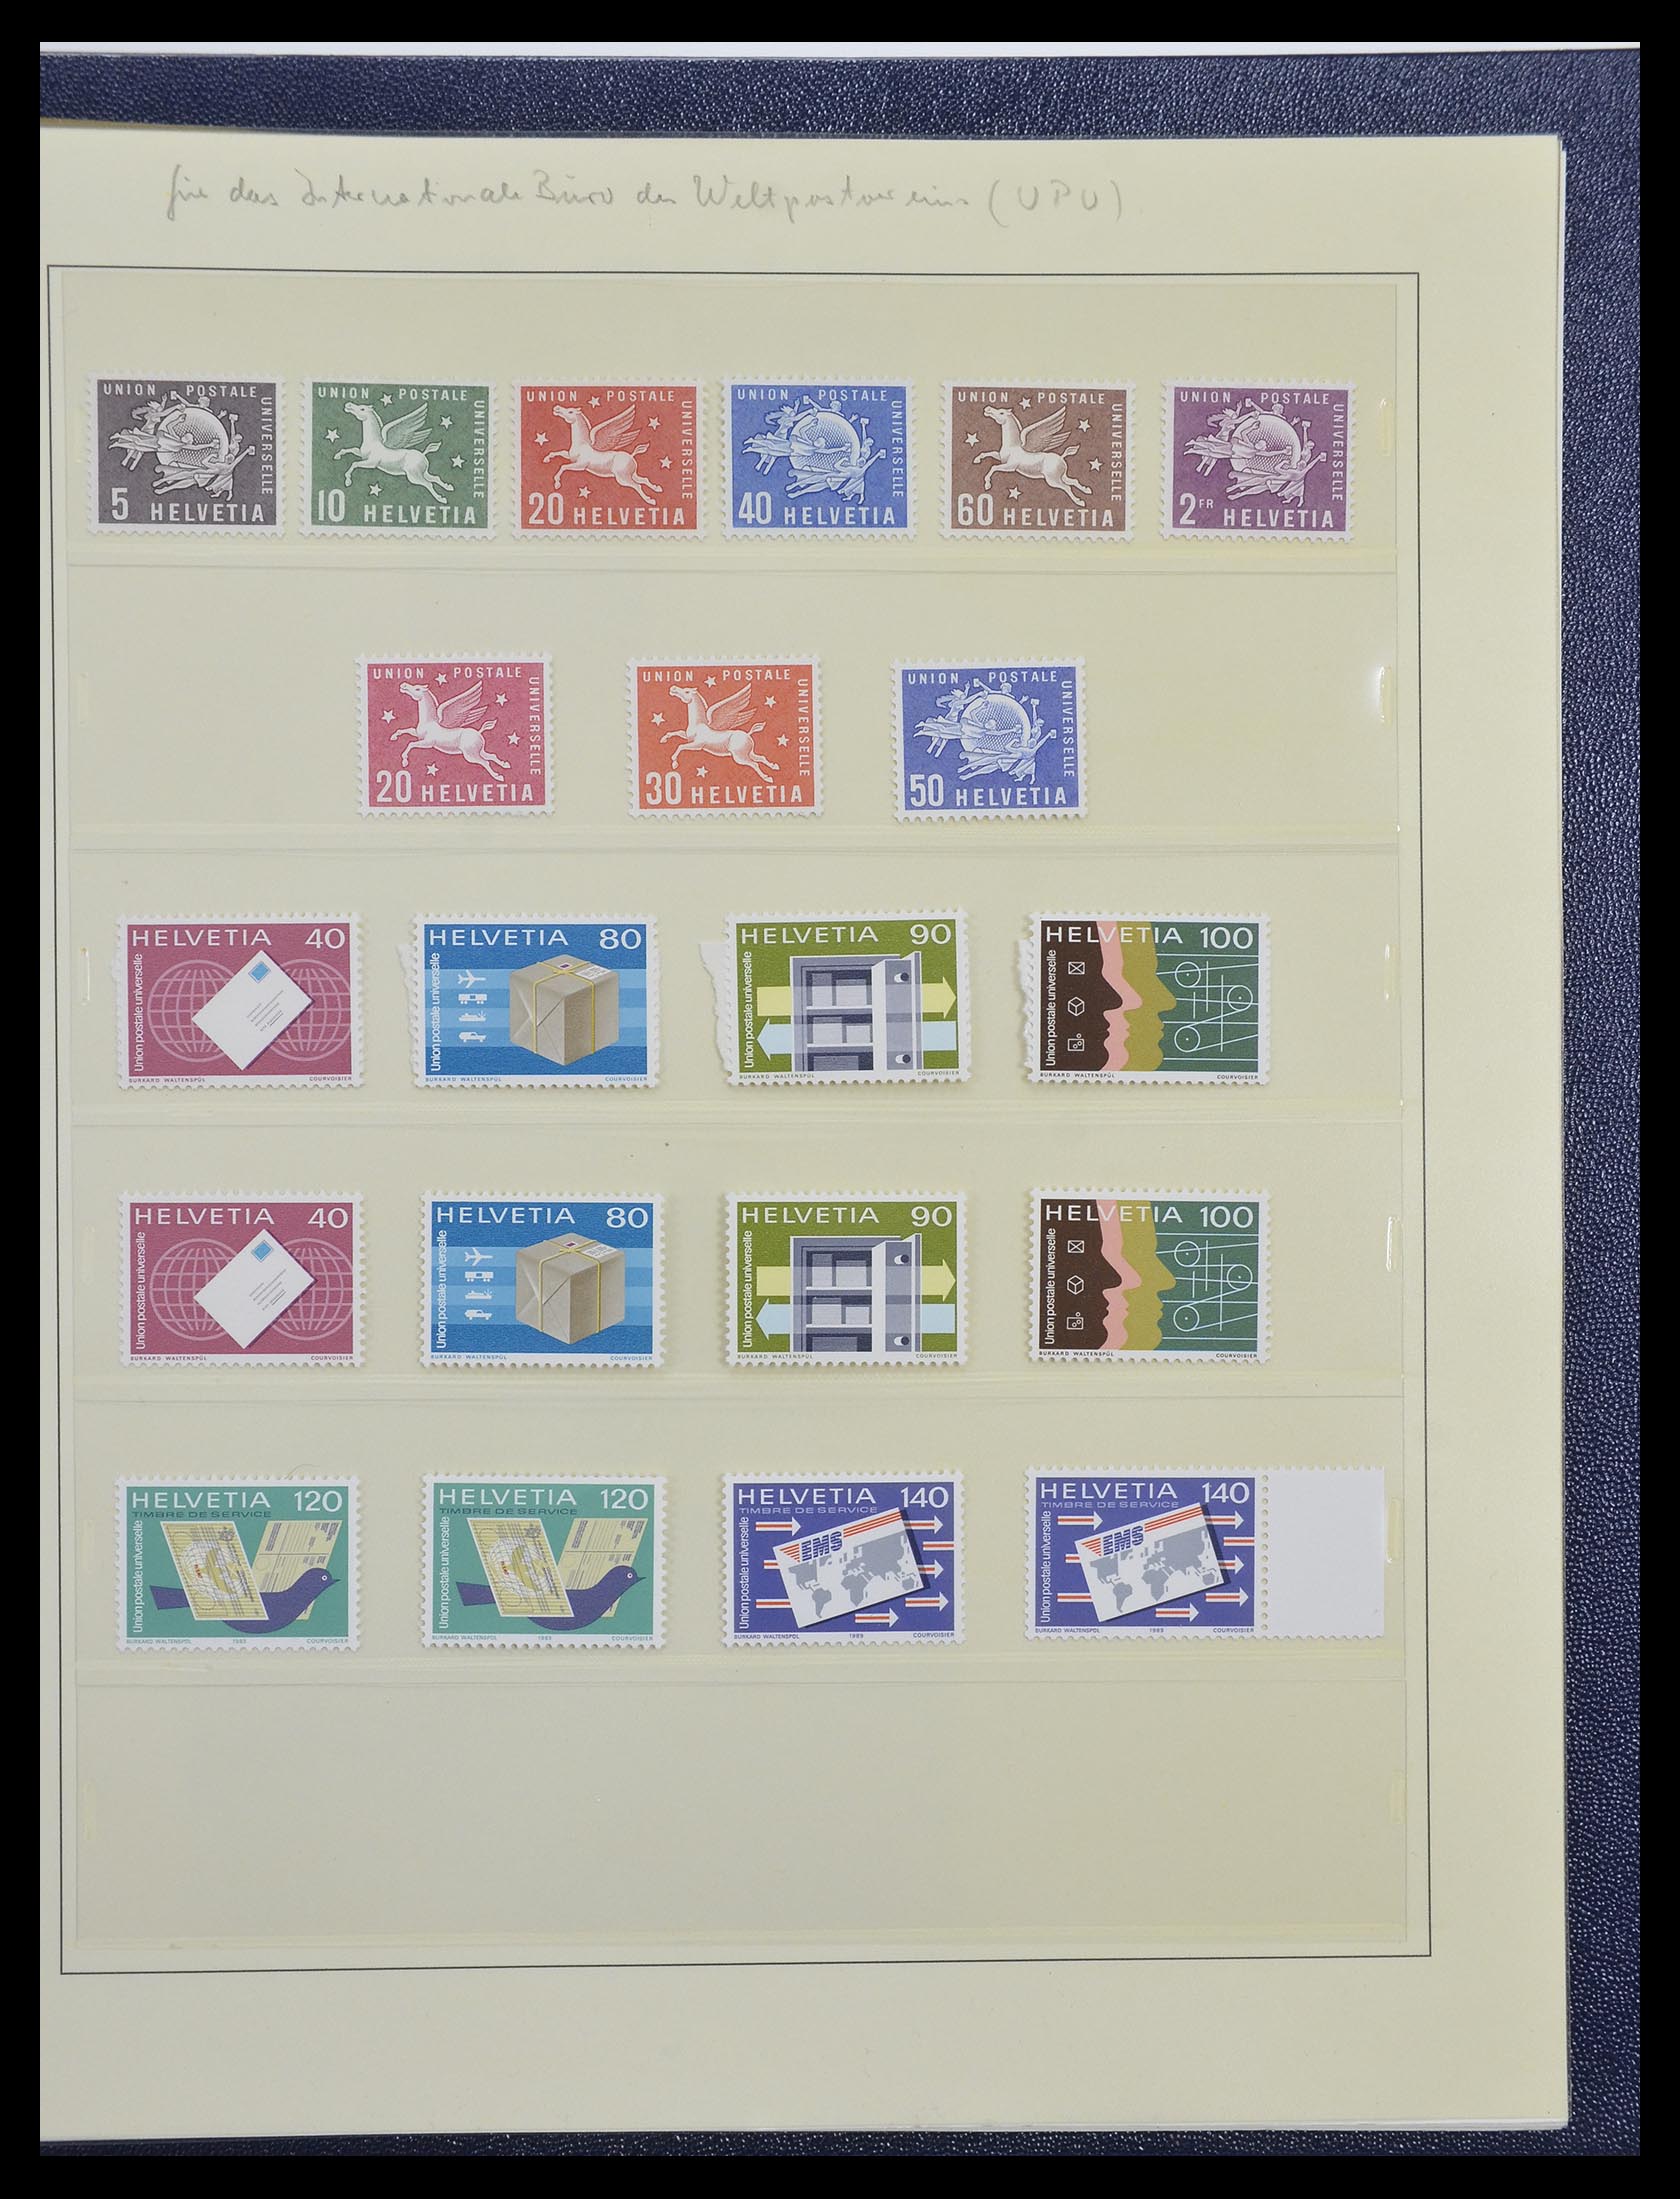 33137 020 - Stamp collection 33137 Switzerland service 1922-2008.